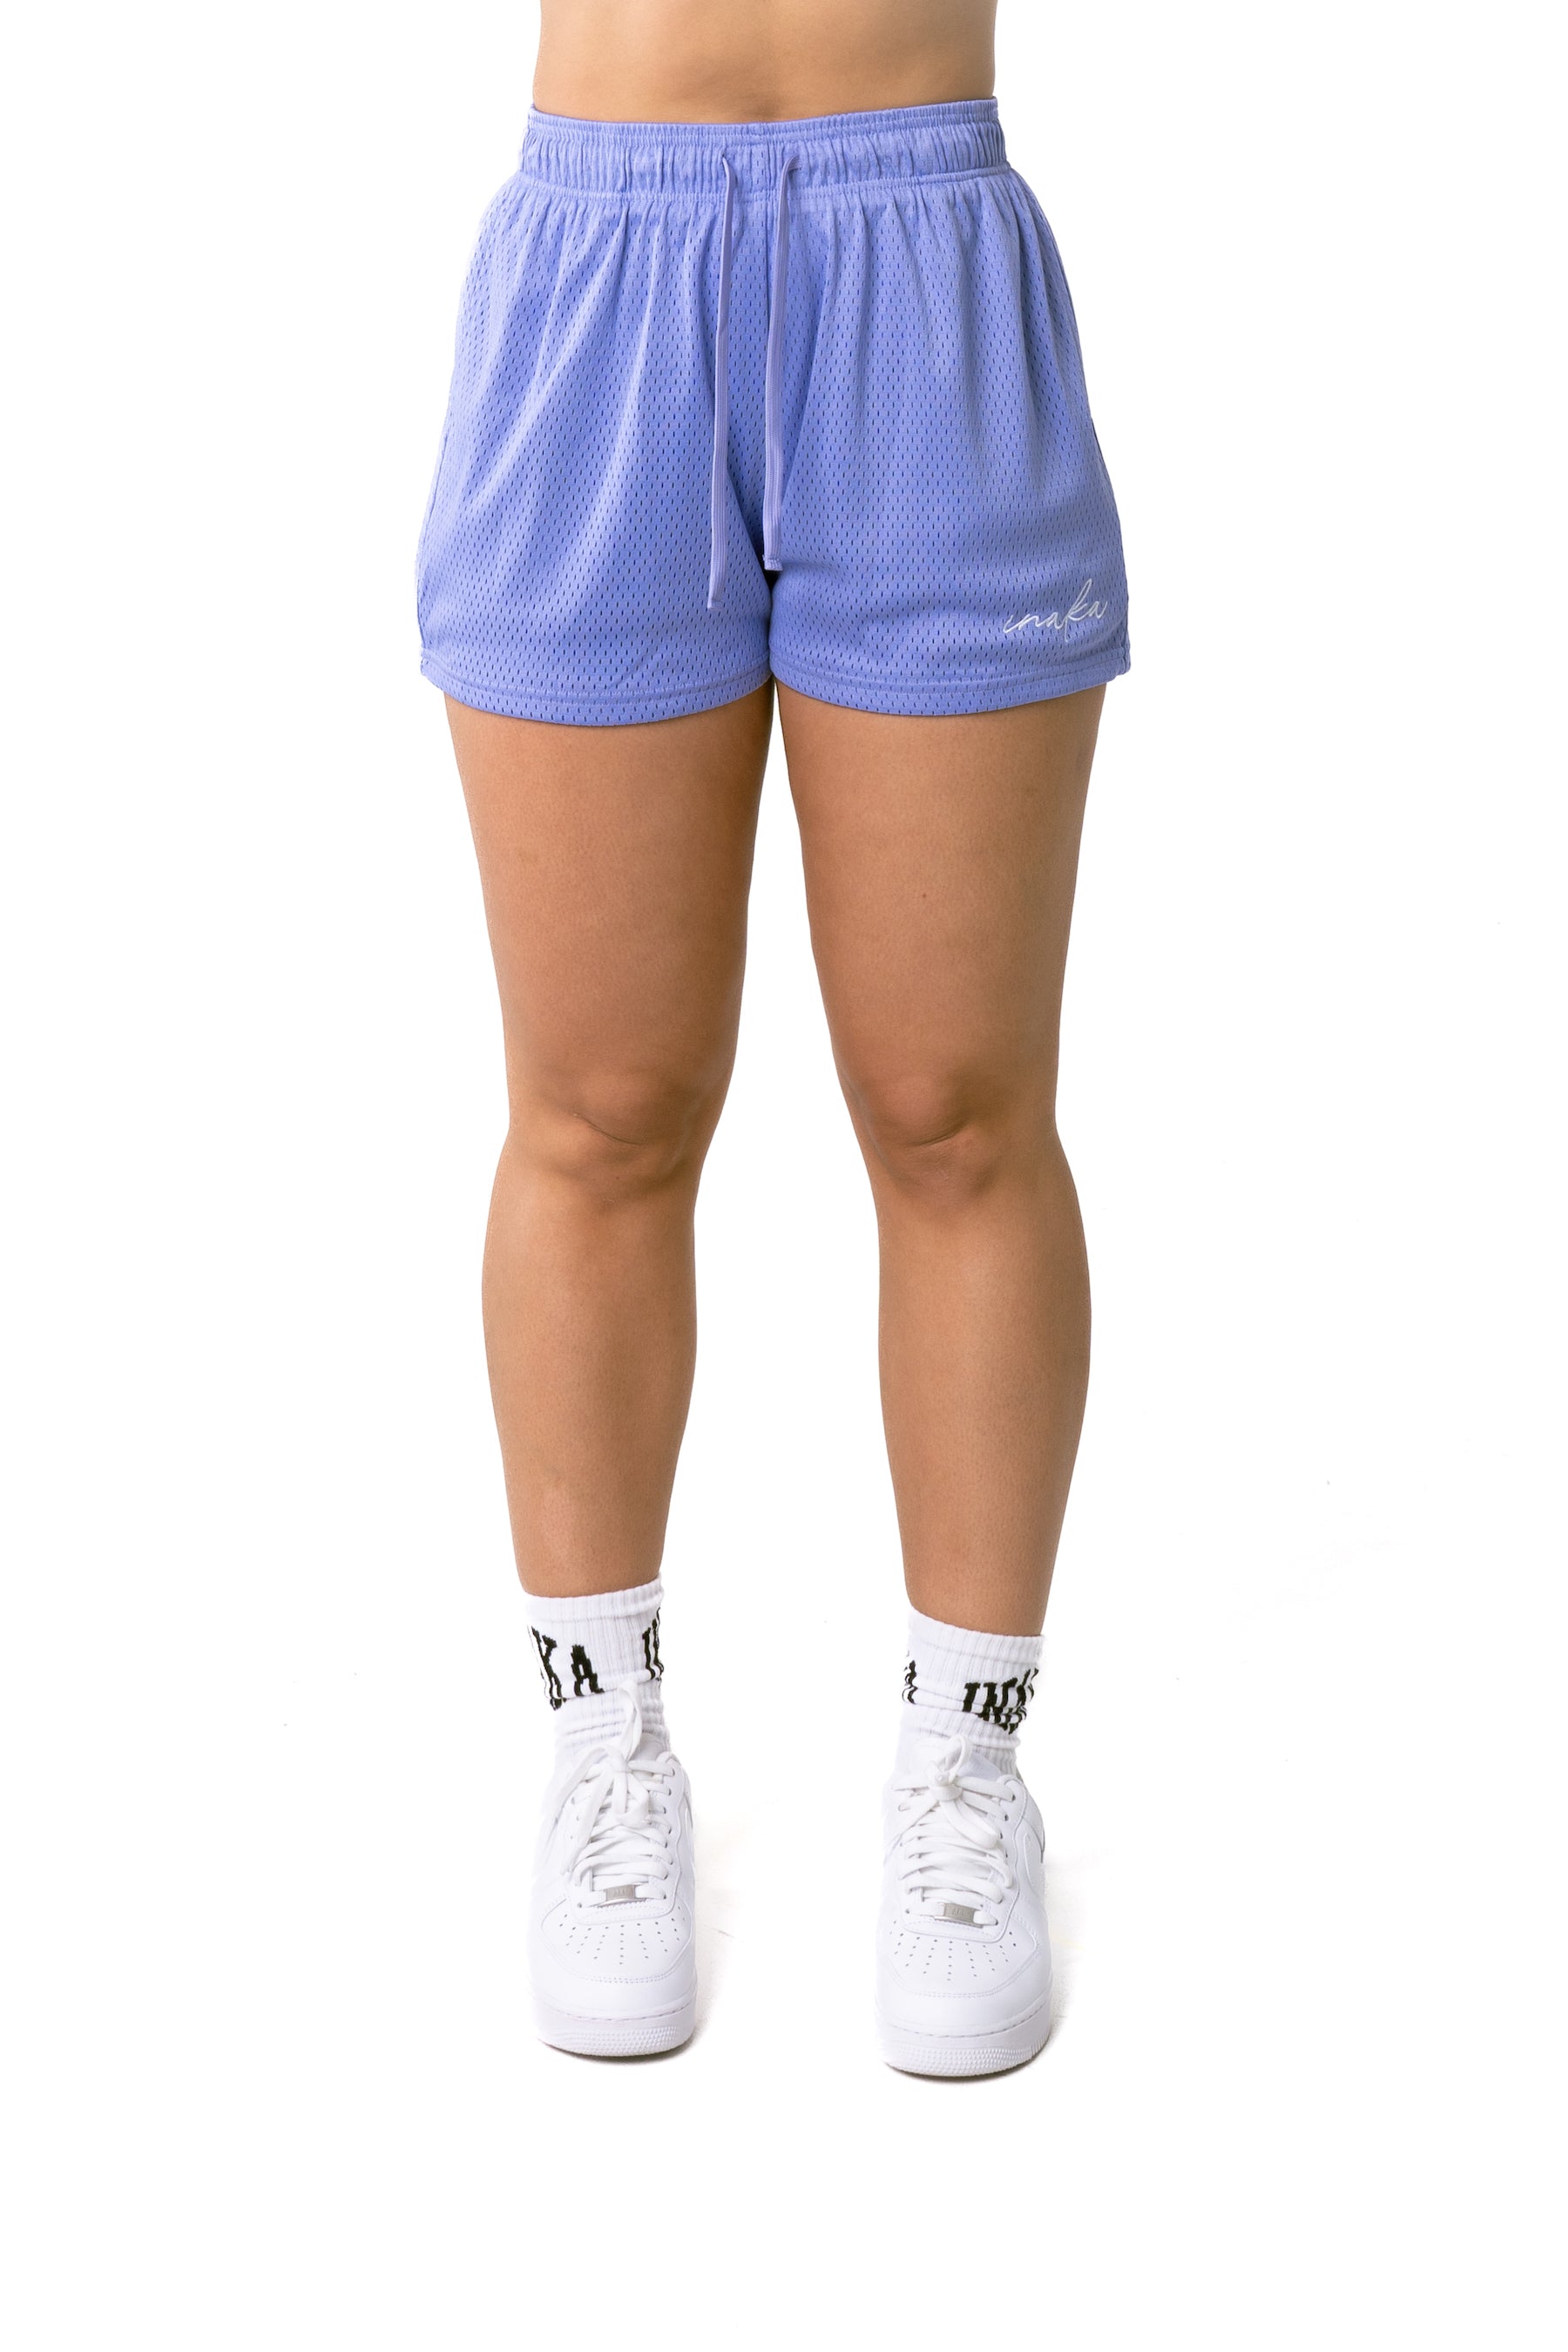 Women's Basic Shorts - Blue Violet